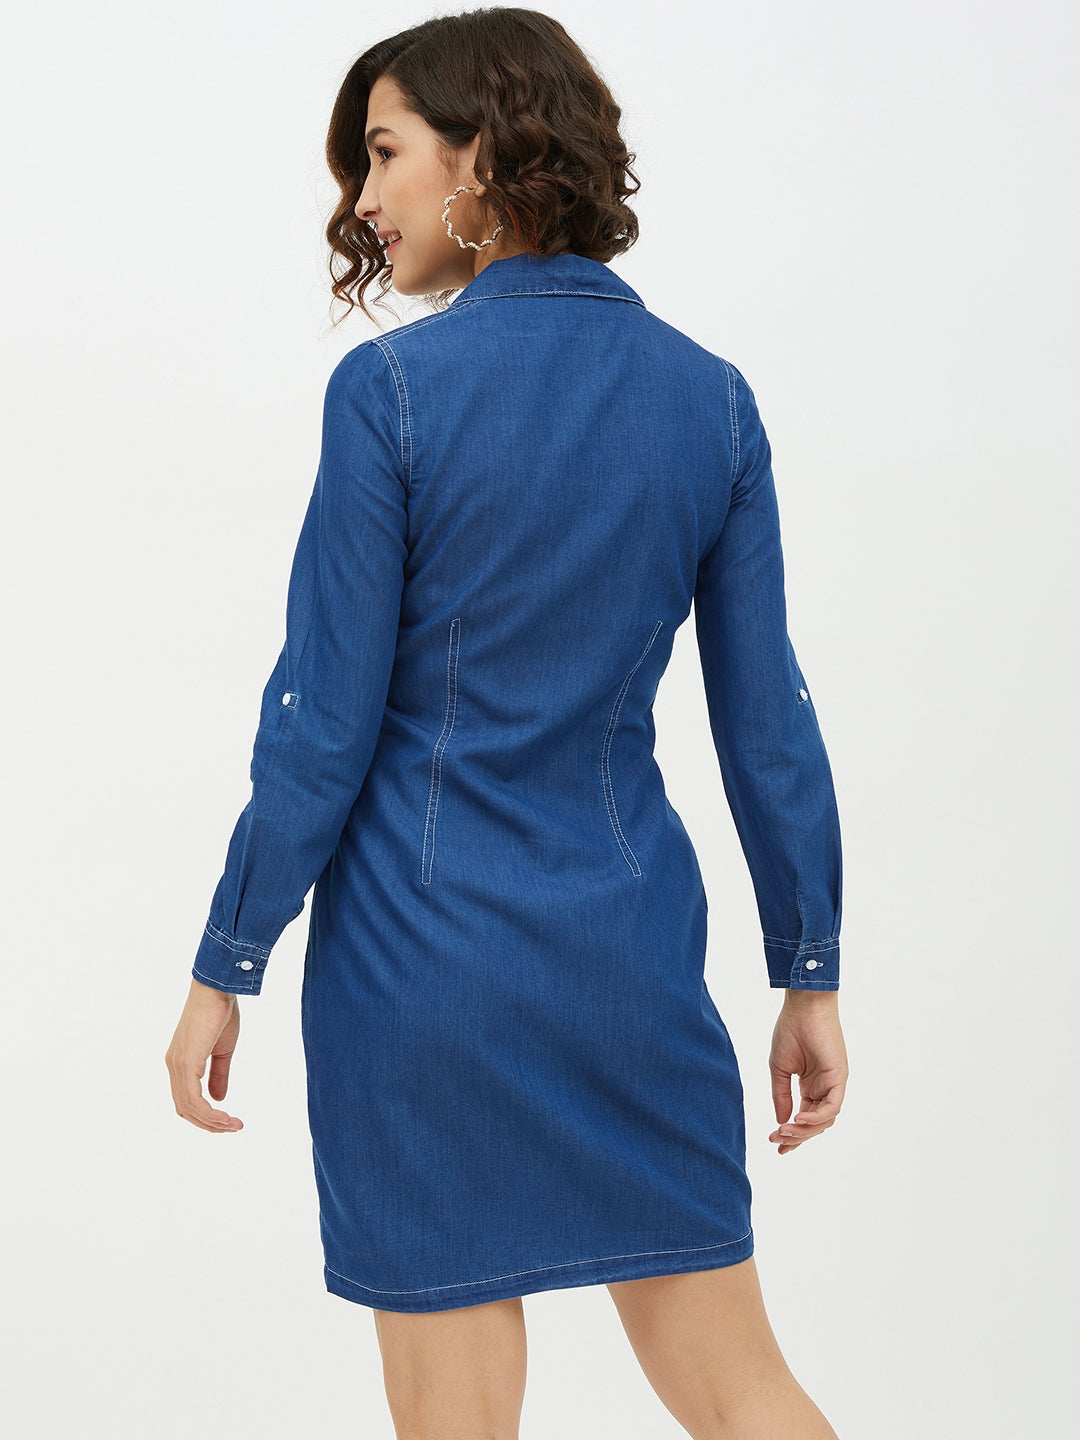 Women's Denim Lapel Collar Shirt Dress - StyleStone